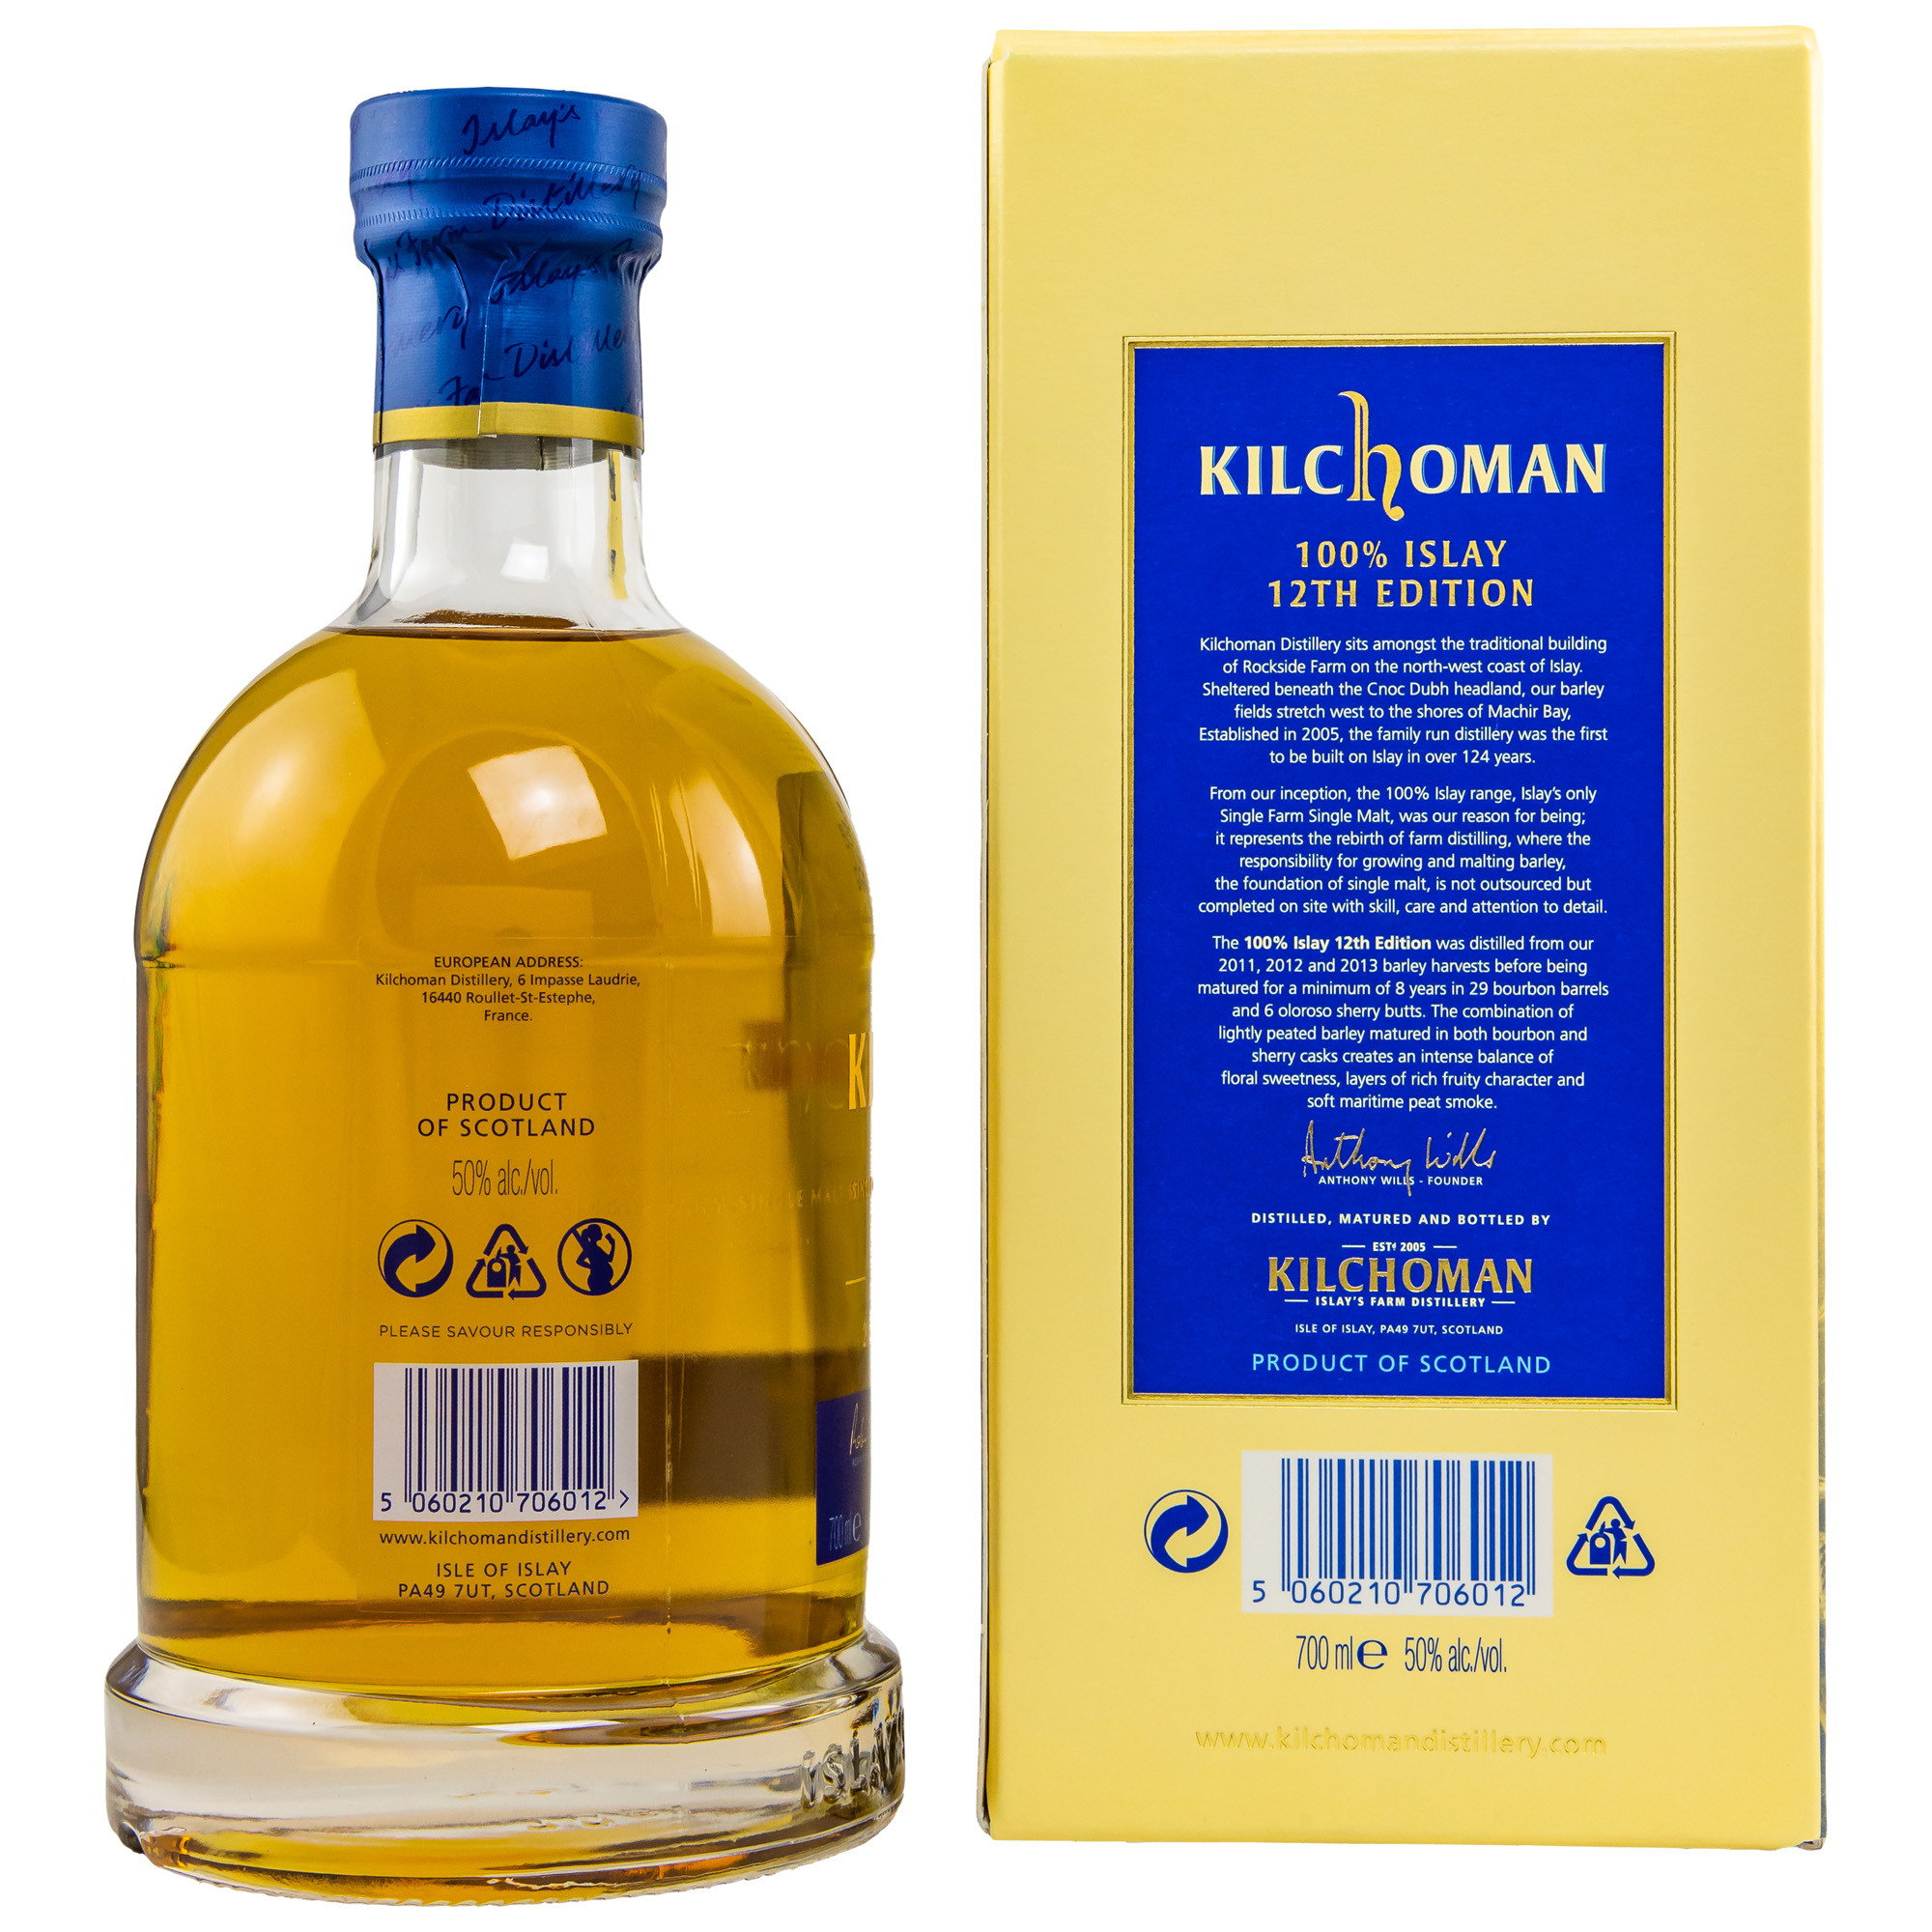 Kilchoman - 100% Islay - 12th Edition 0,7l 50%vol.